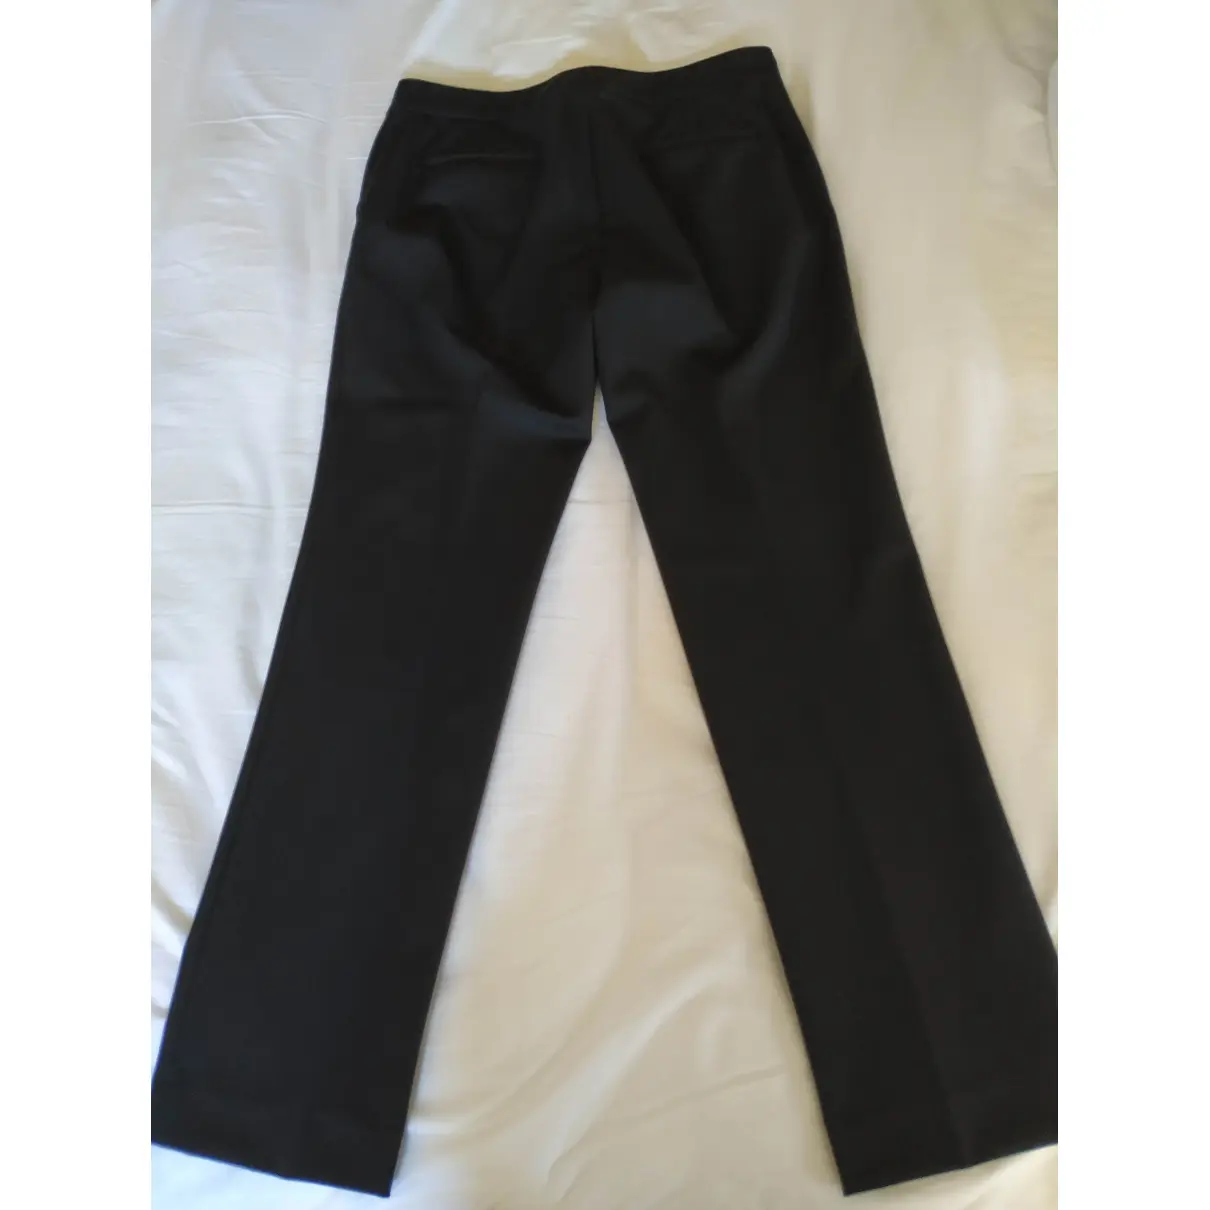 Buy Twinset Large pants online